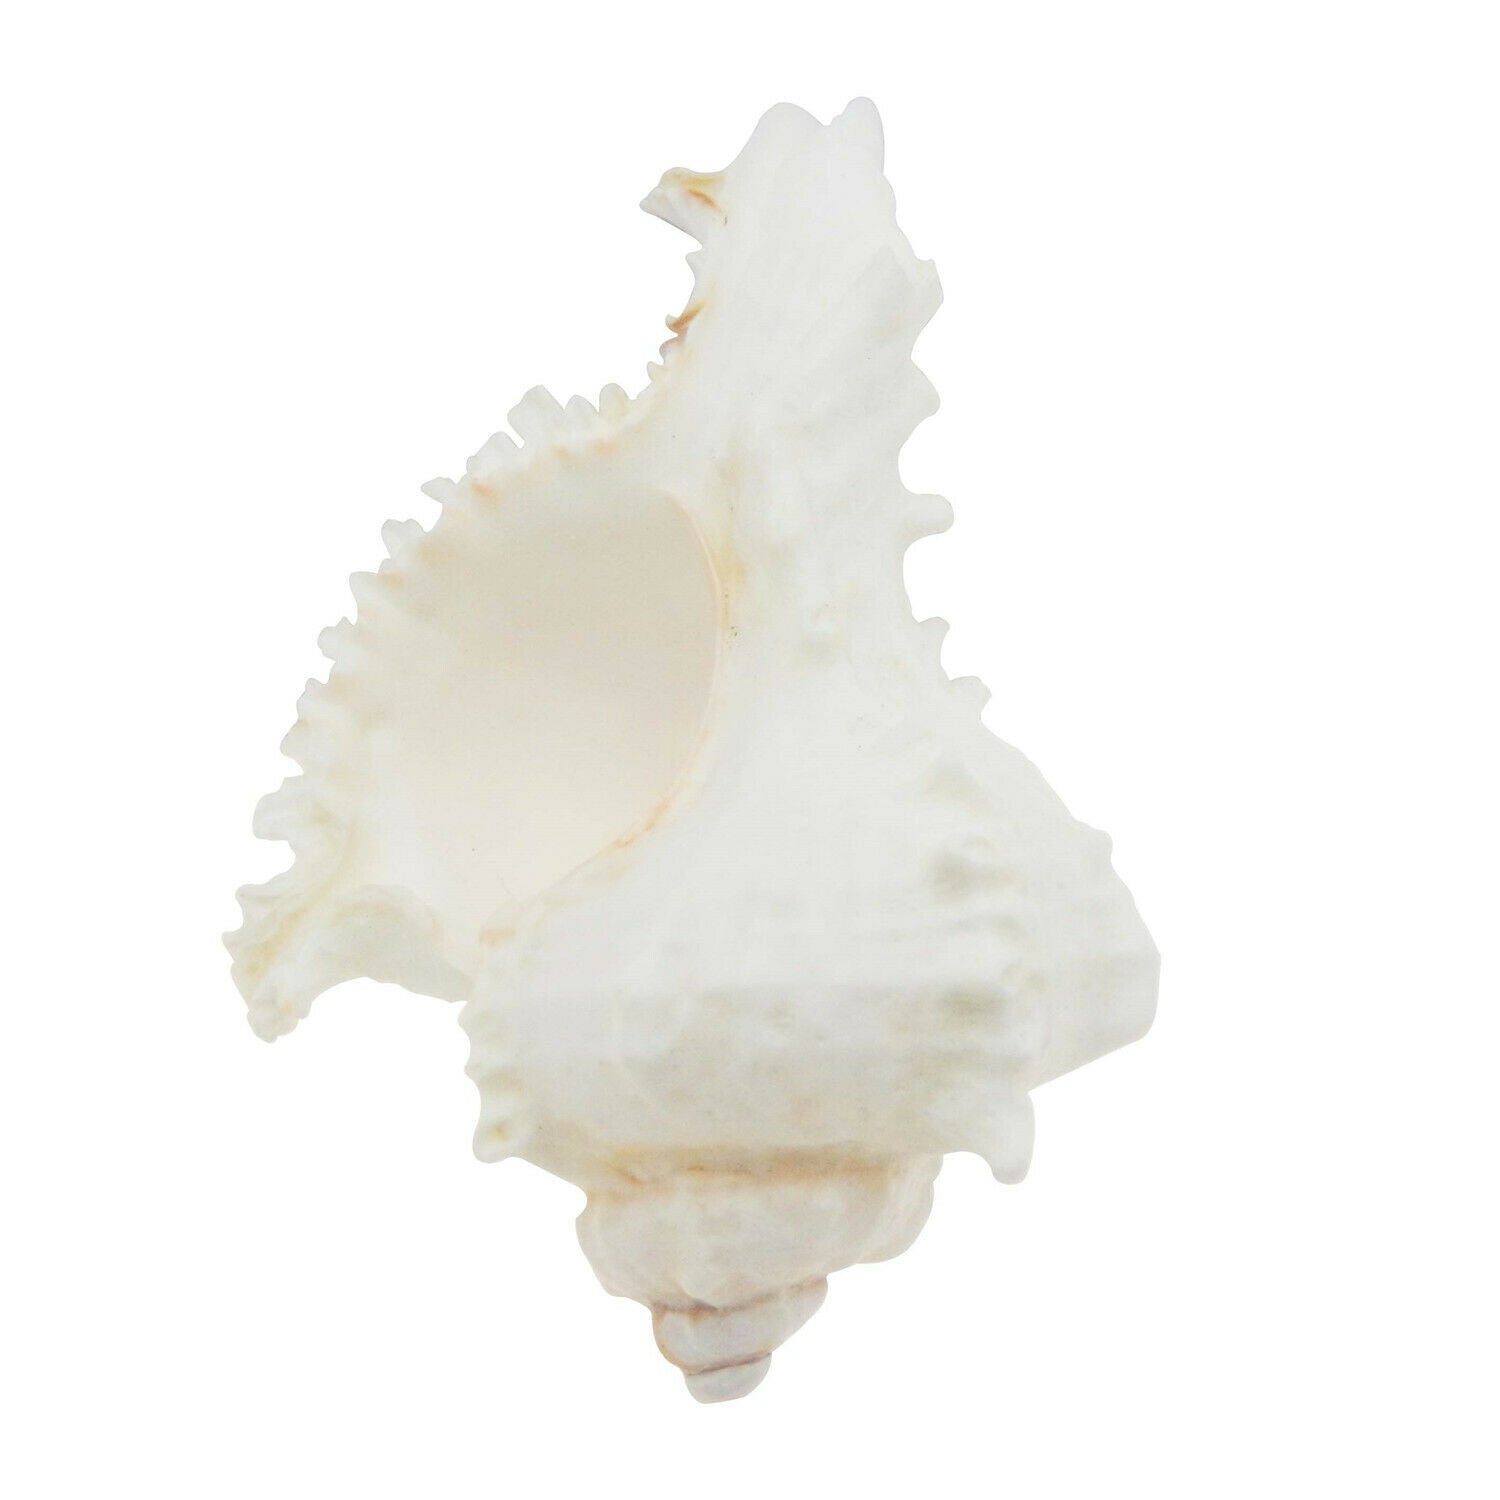 1 Piece Natural Shells 6 - 7 cm Snail Conch Ramose Murex Seashell Nautical Decor